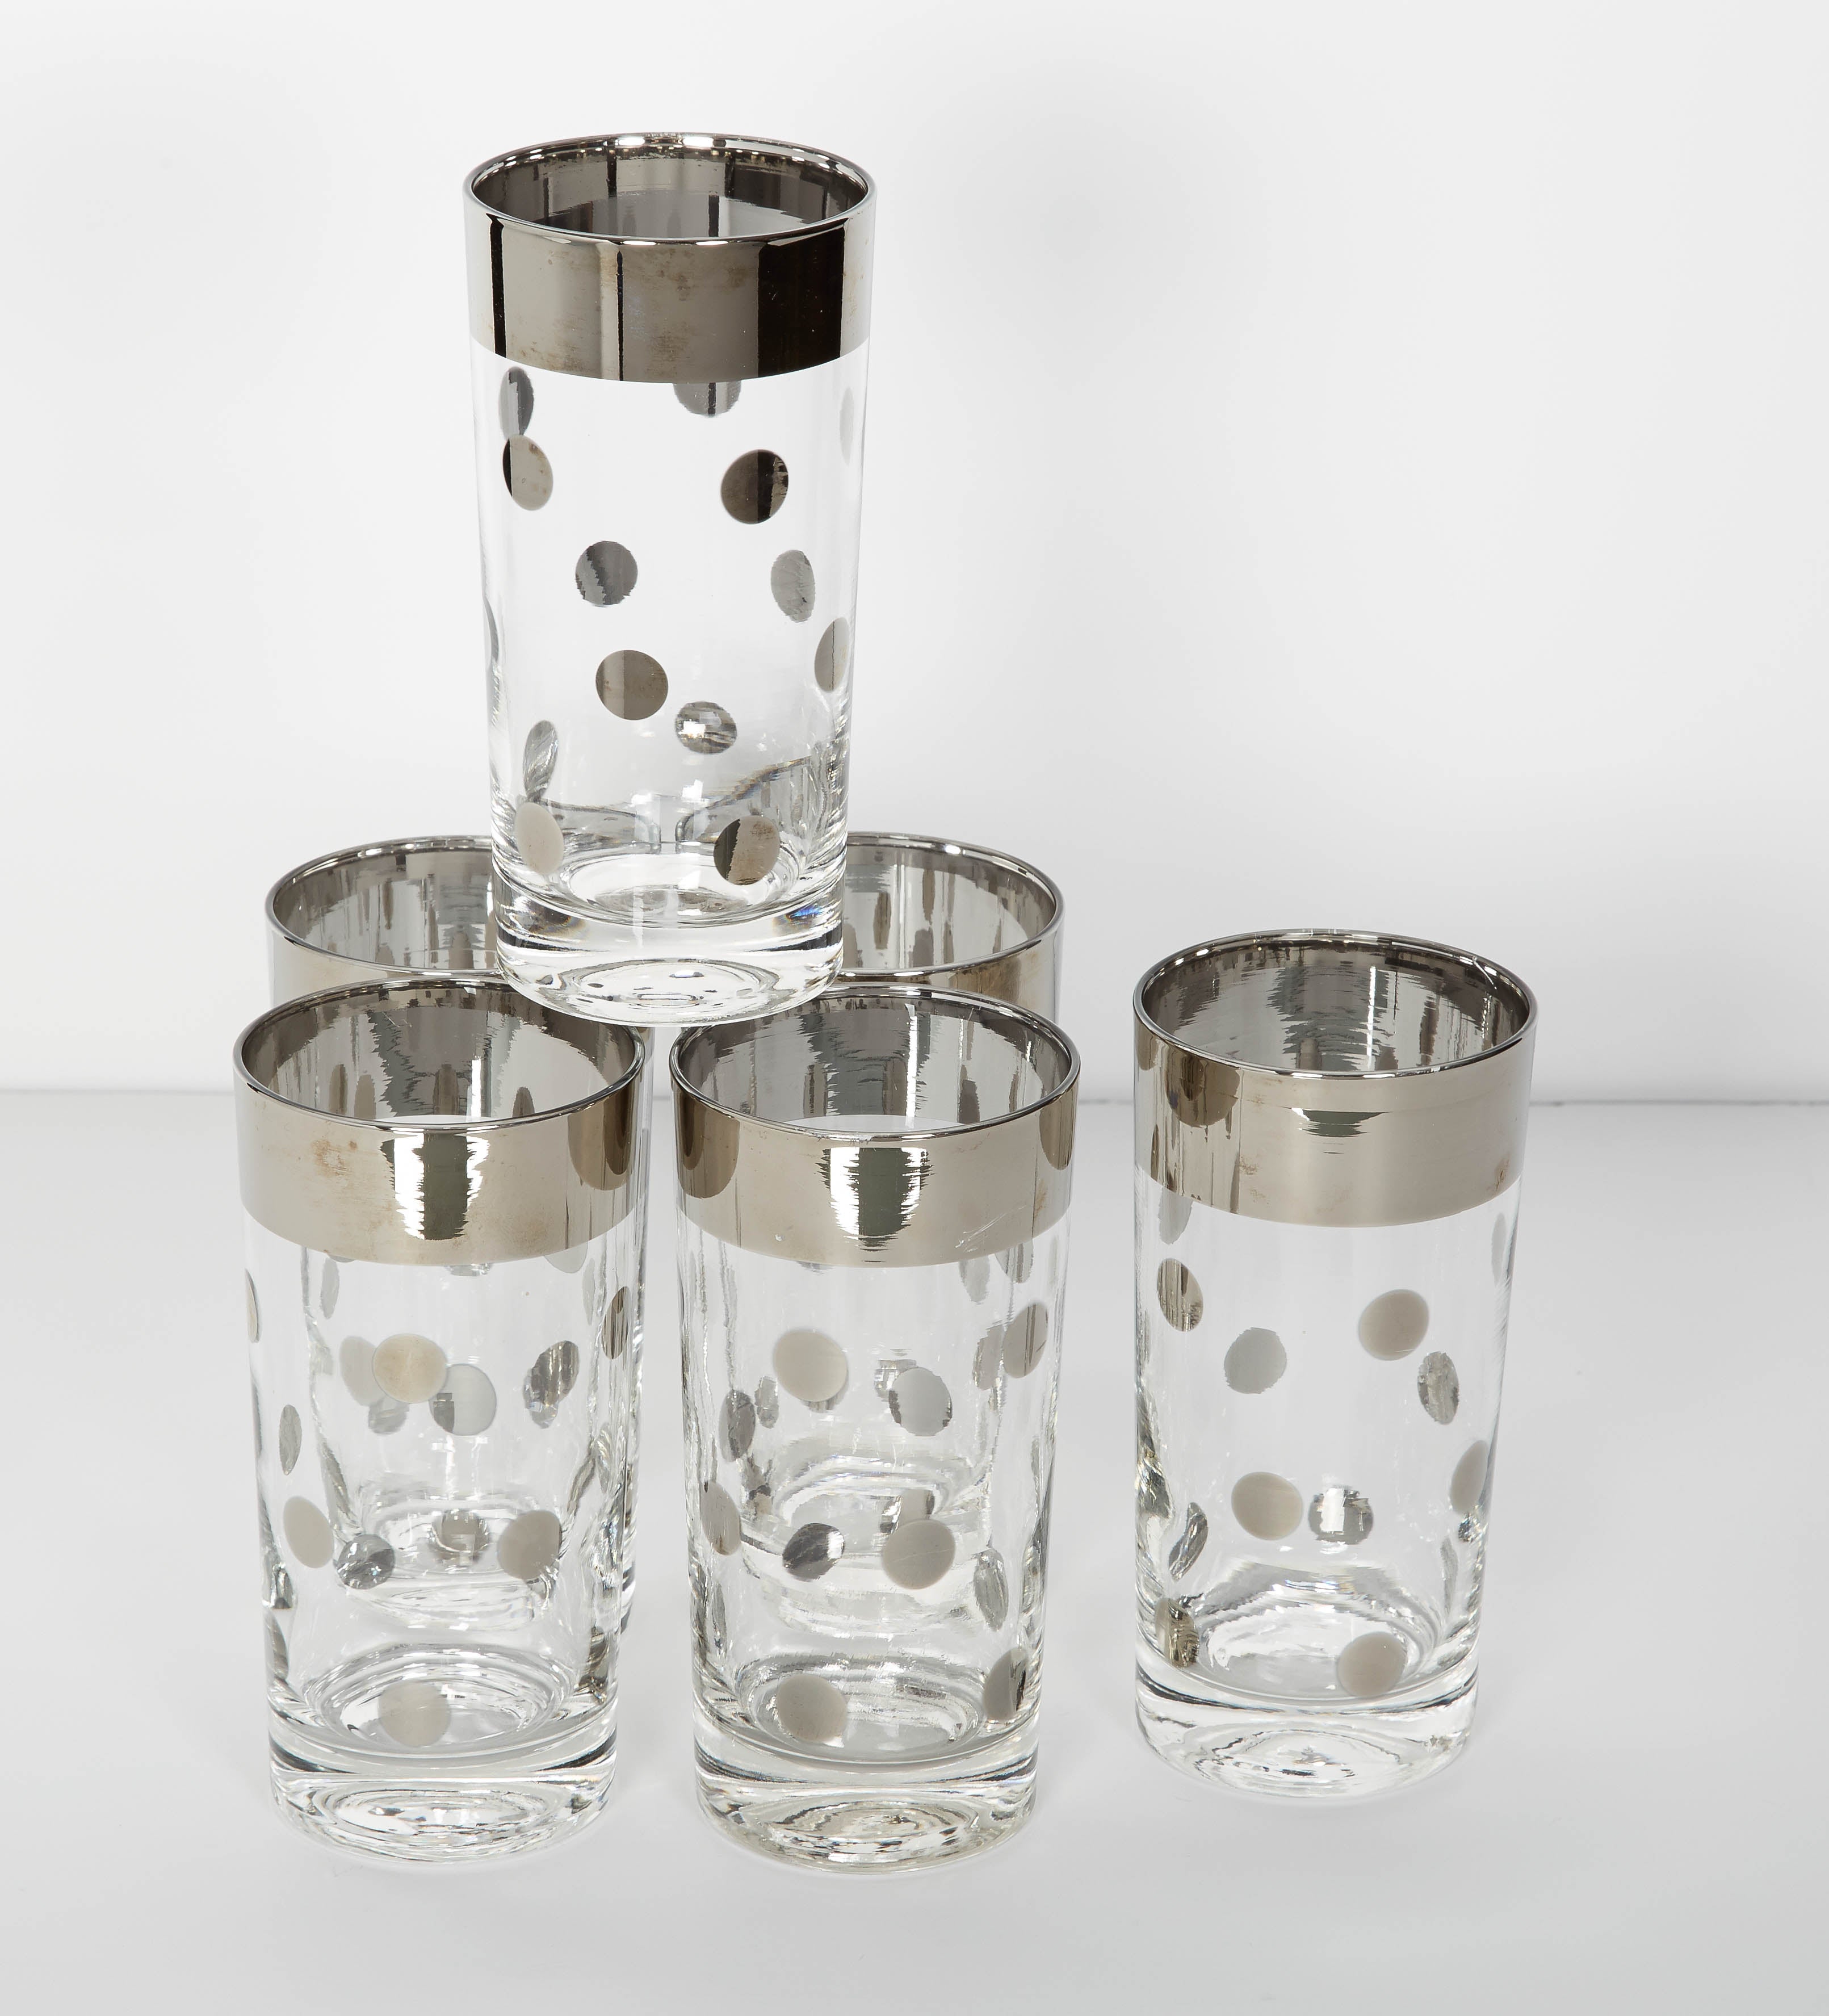 Mid-Century Modern Set of Ten Dorothy Thorpe Barware Tumblr Glasses with Polka Dot Design